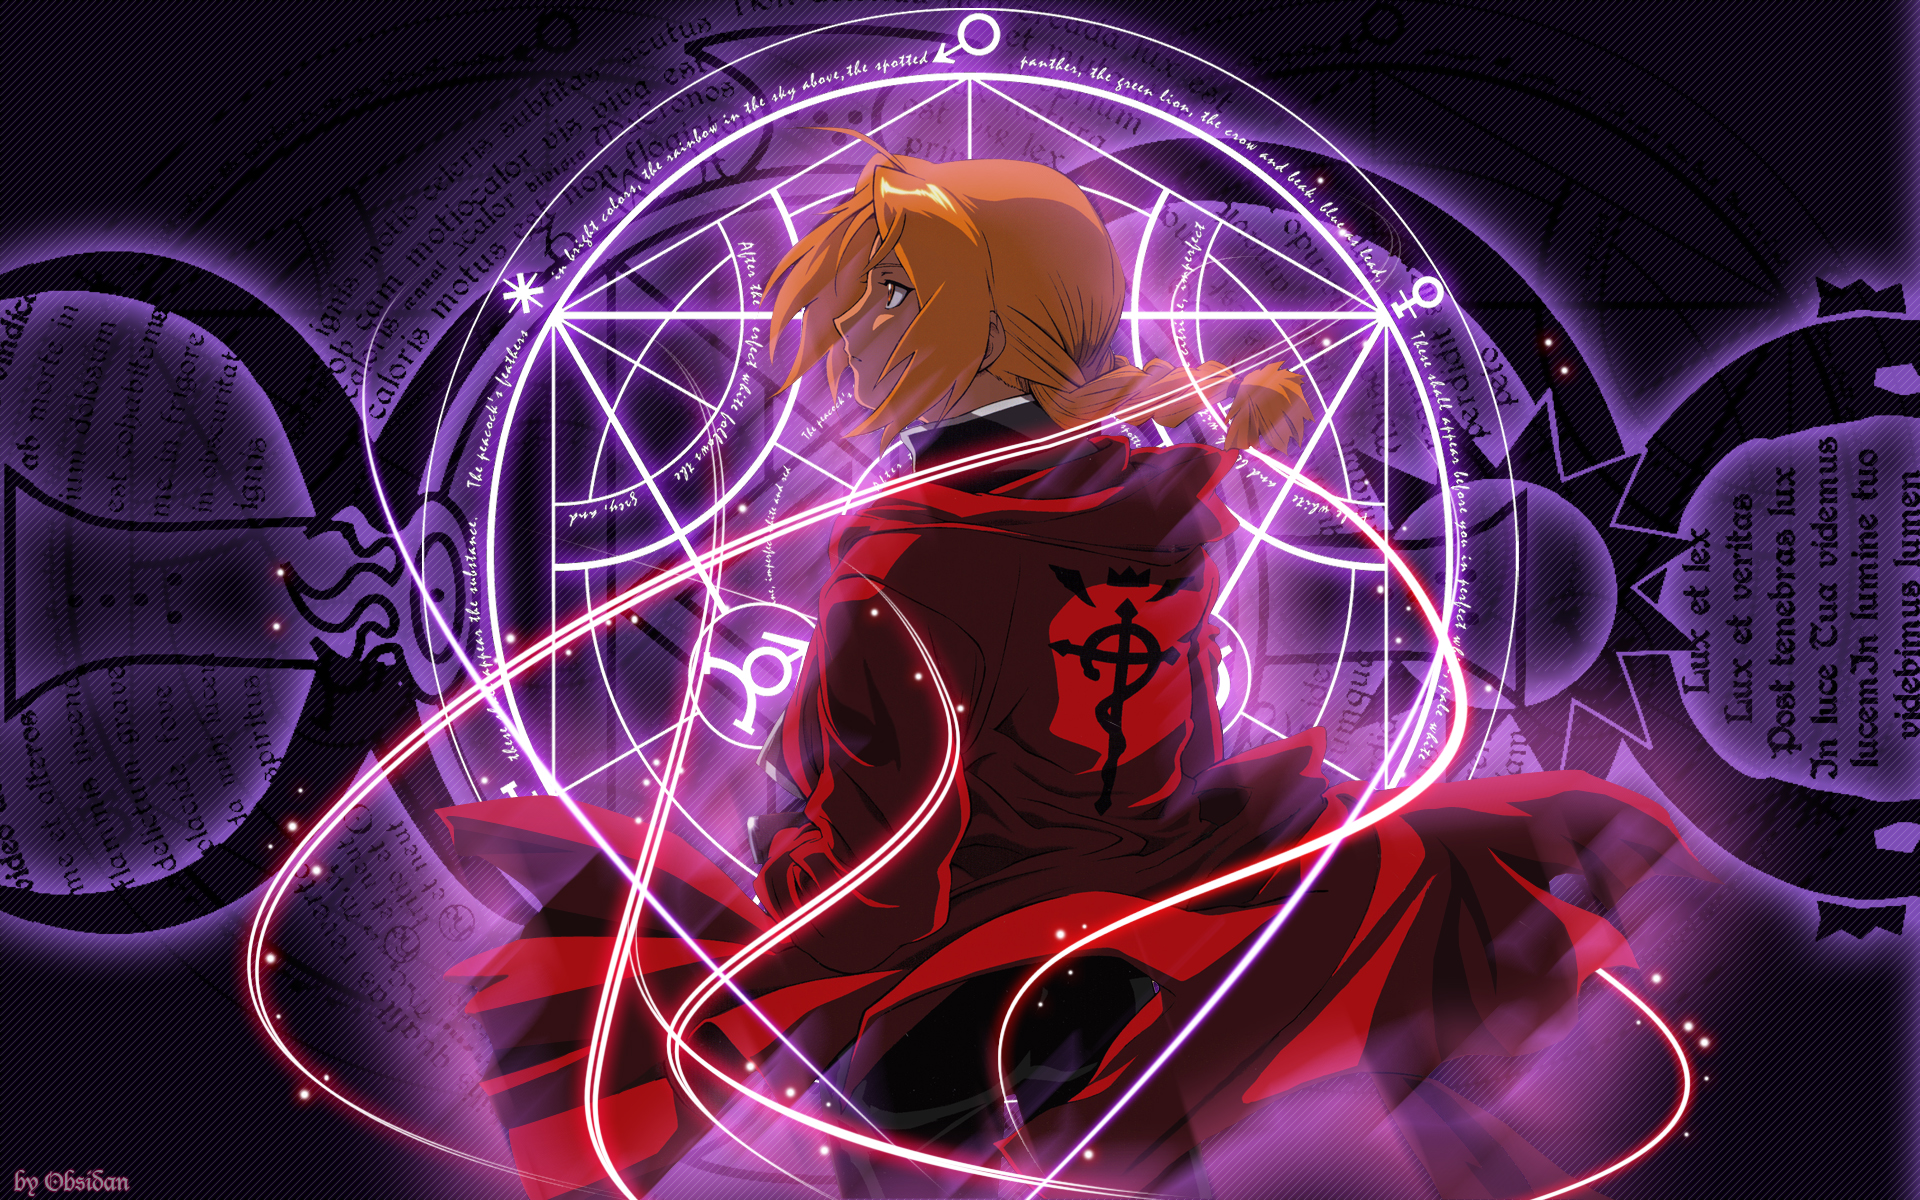 Fullmetal Alchemist, Elric Edward - desktop wallpaper